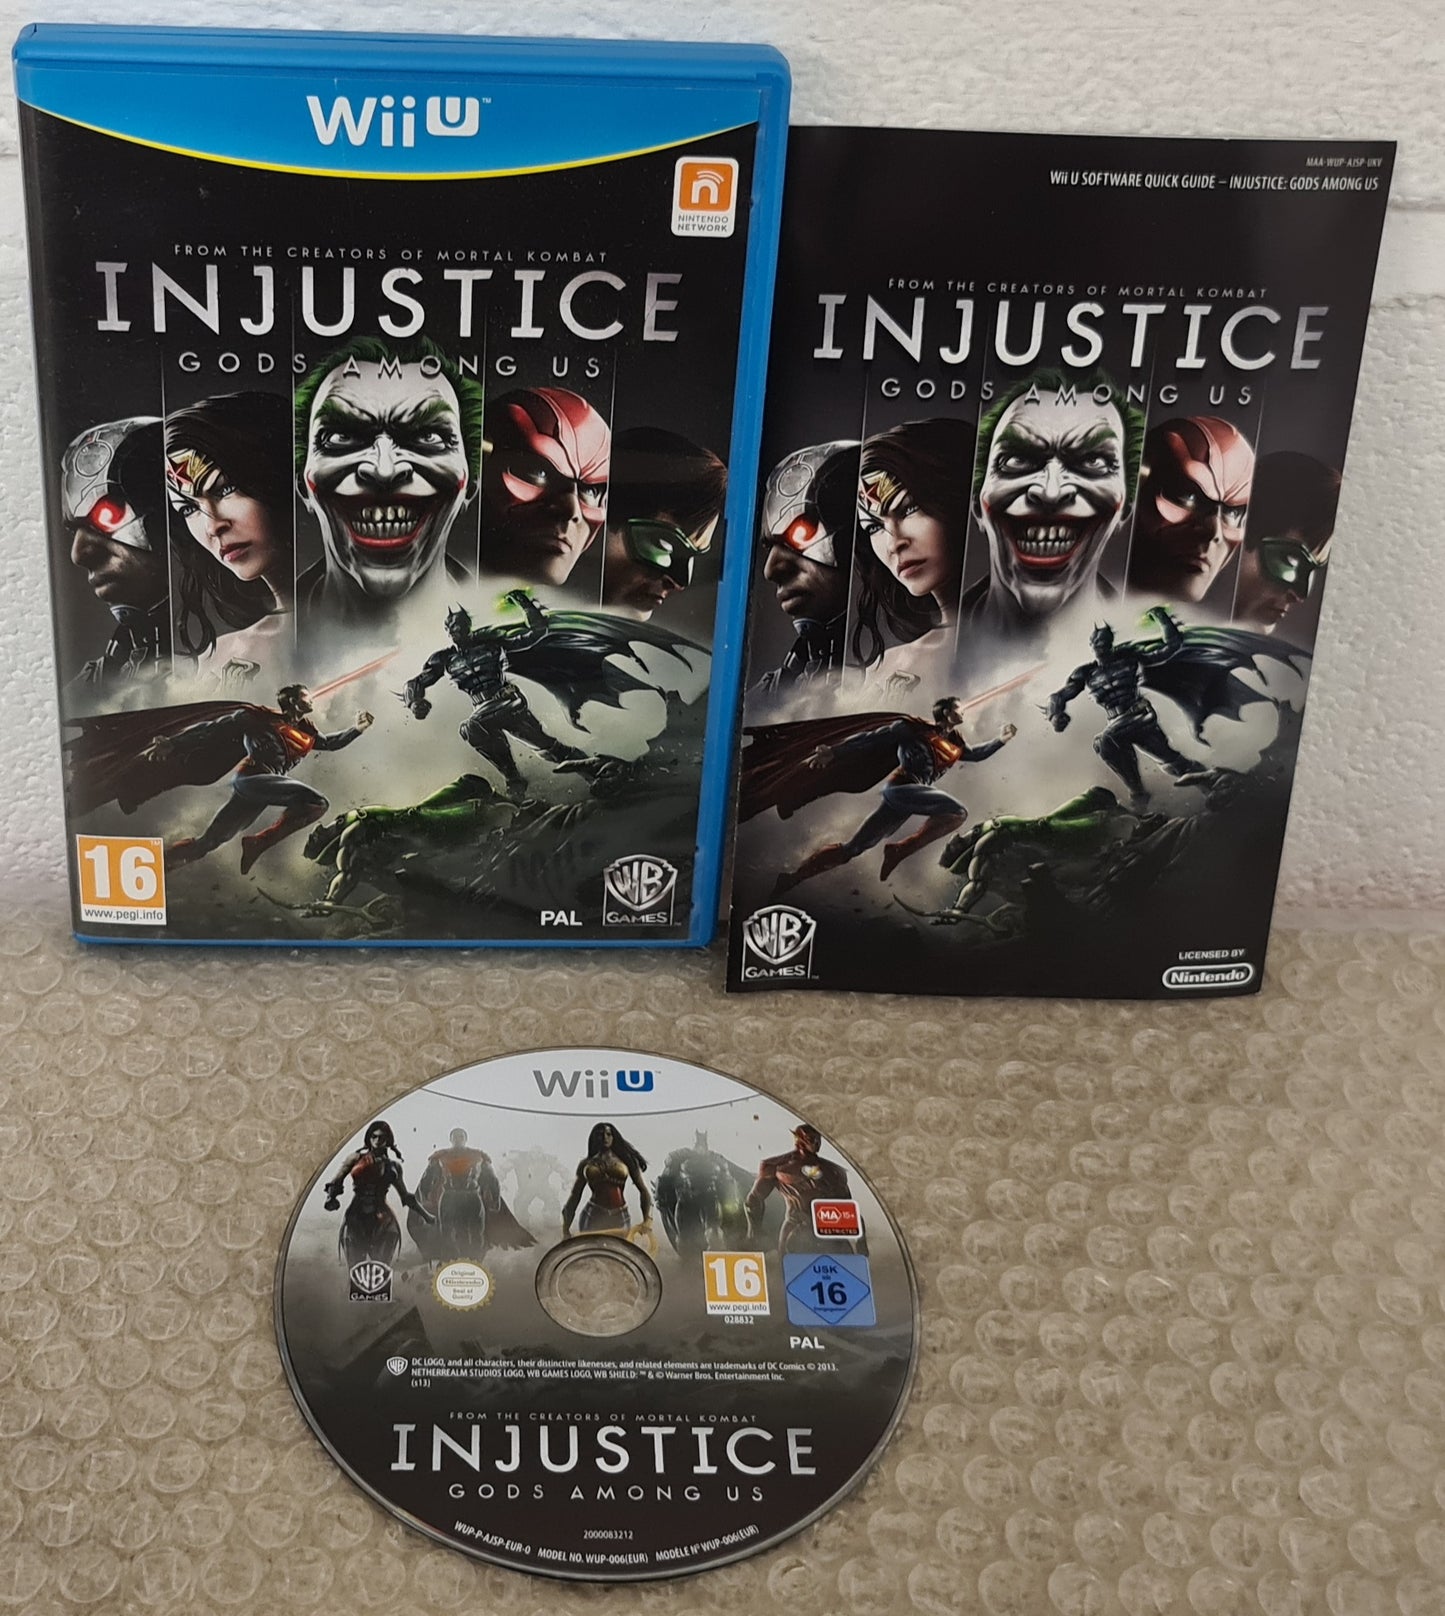 Injustice Gods Among Us Nintendo Wii U Game